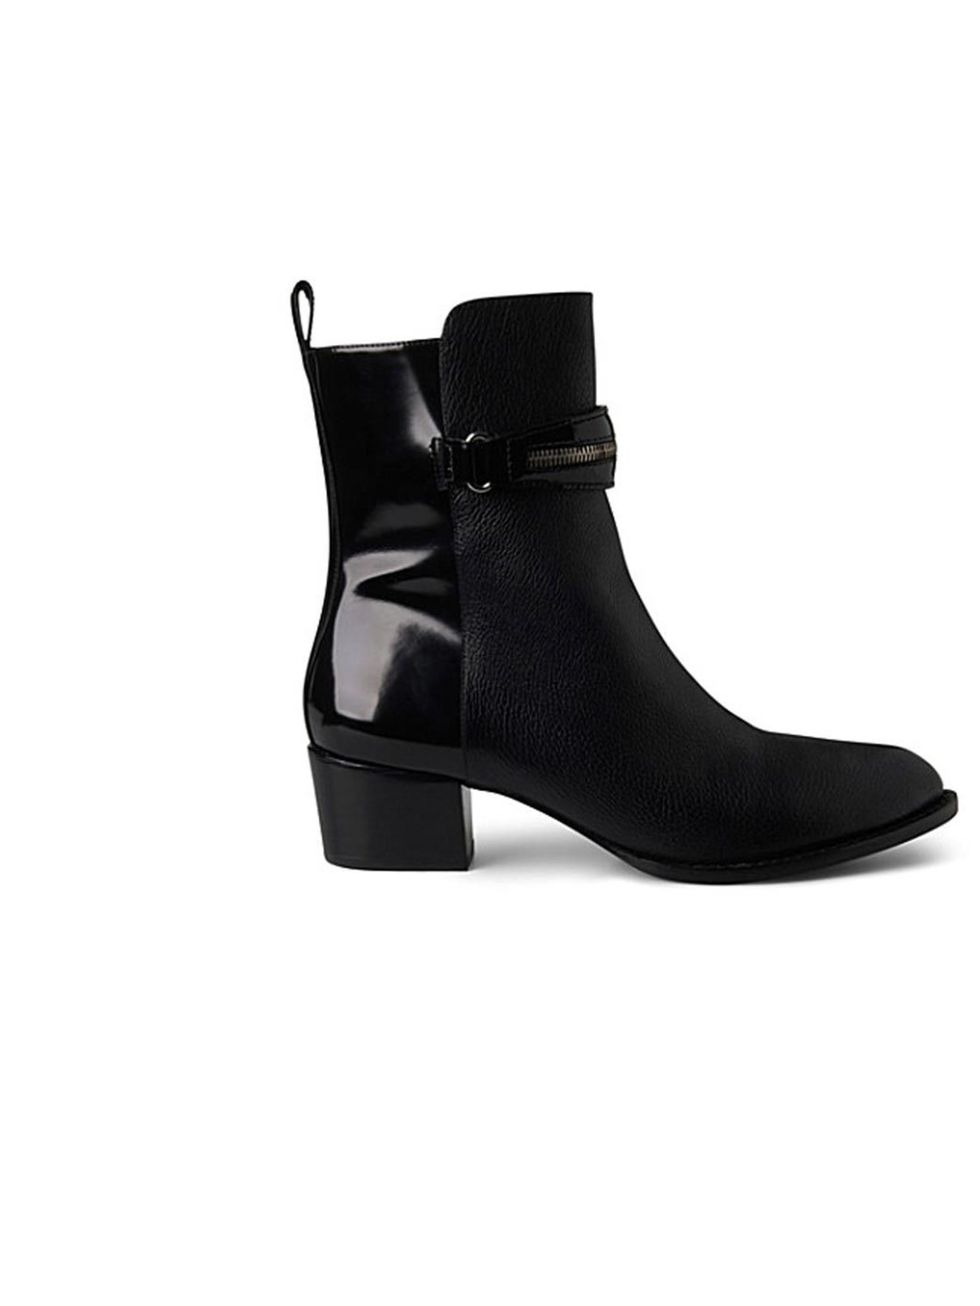 <p>Alexander Wang 'Gabrielle' ankle boots, £475, at Selfridges</p><p><a href="http://shopping.elleuk.com/browse/womens-shoes?fts=alexander+wang">BUY NOW</a></p>